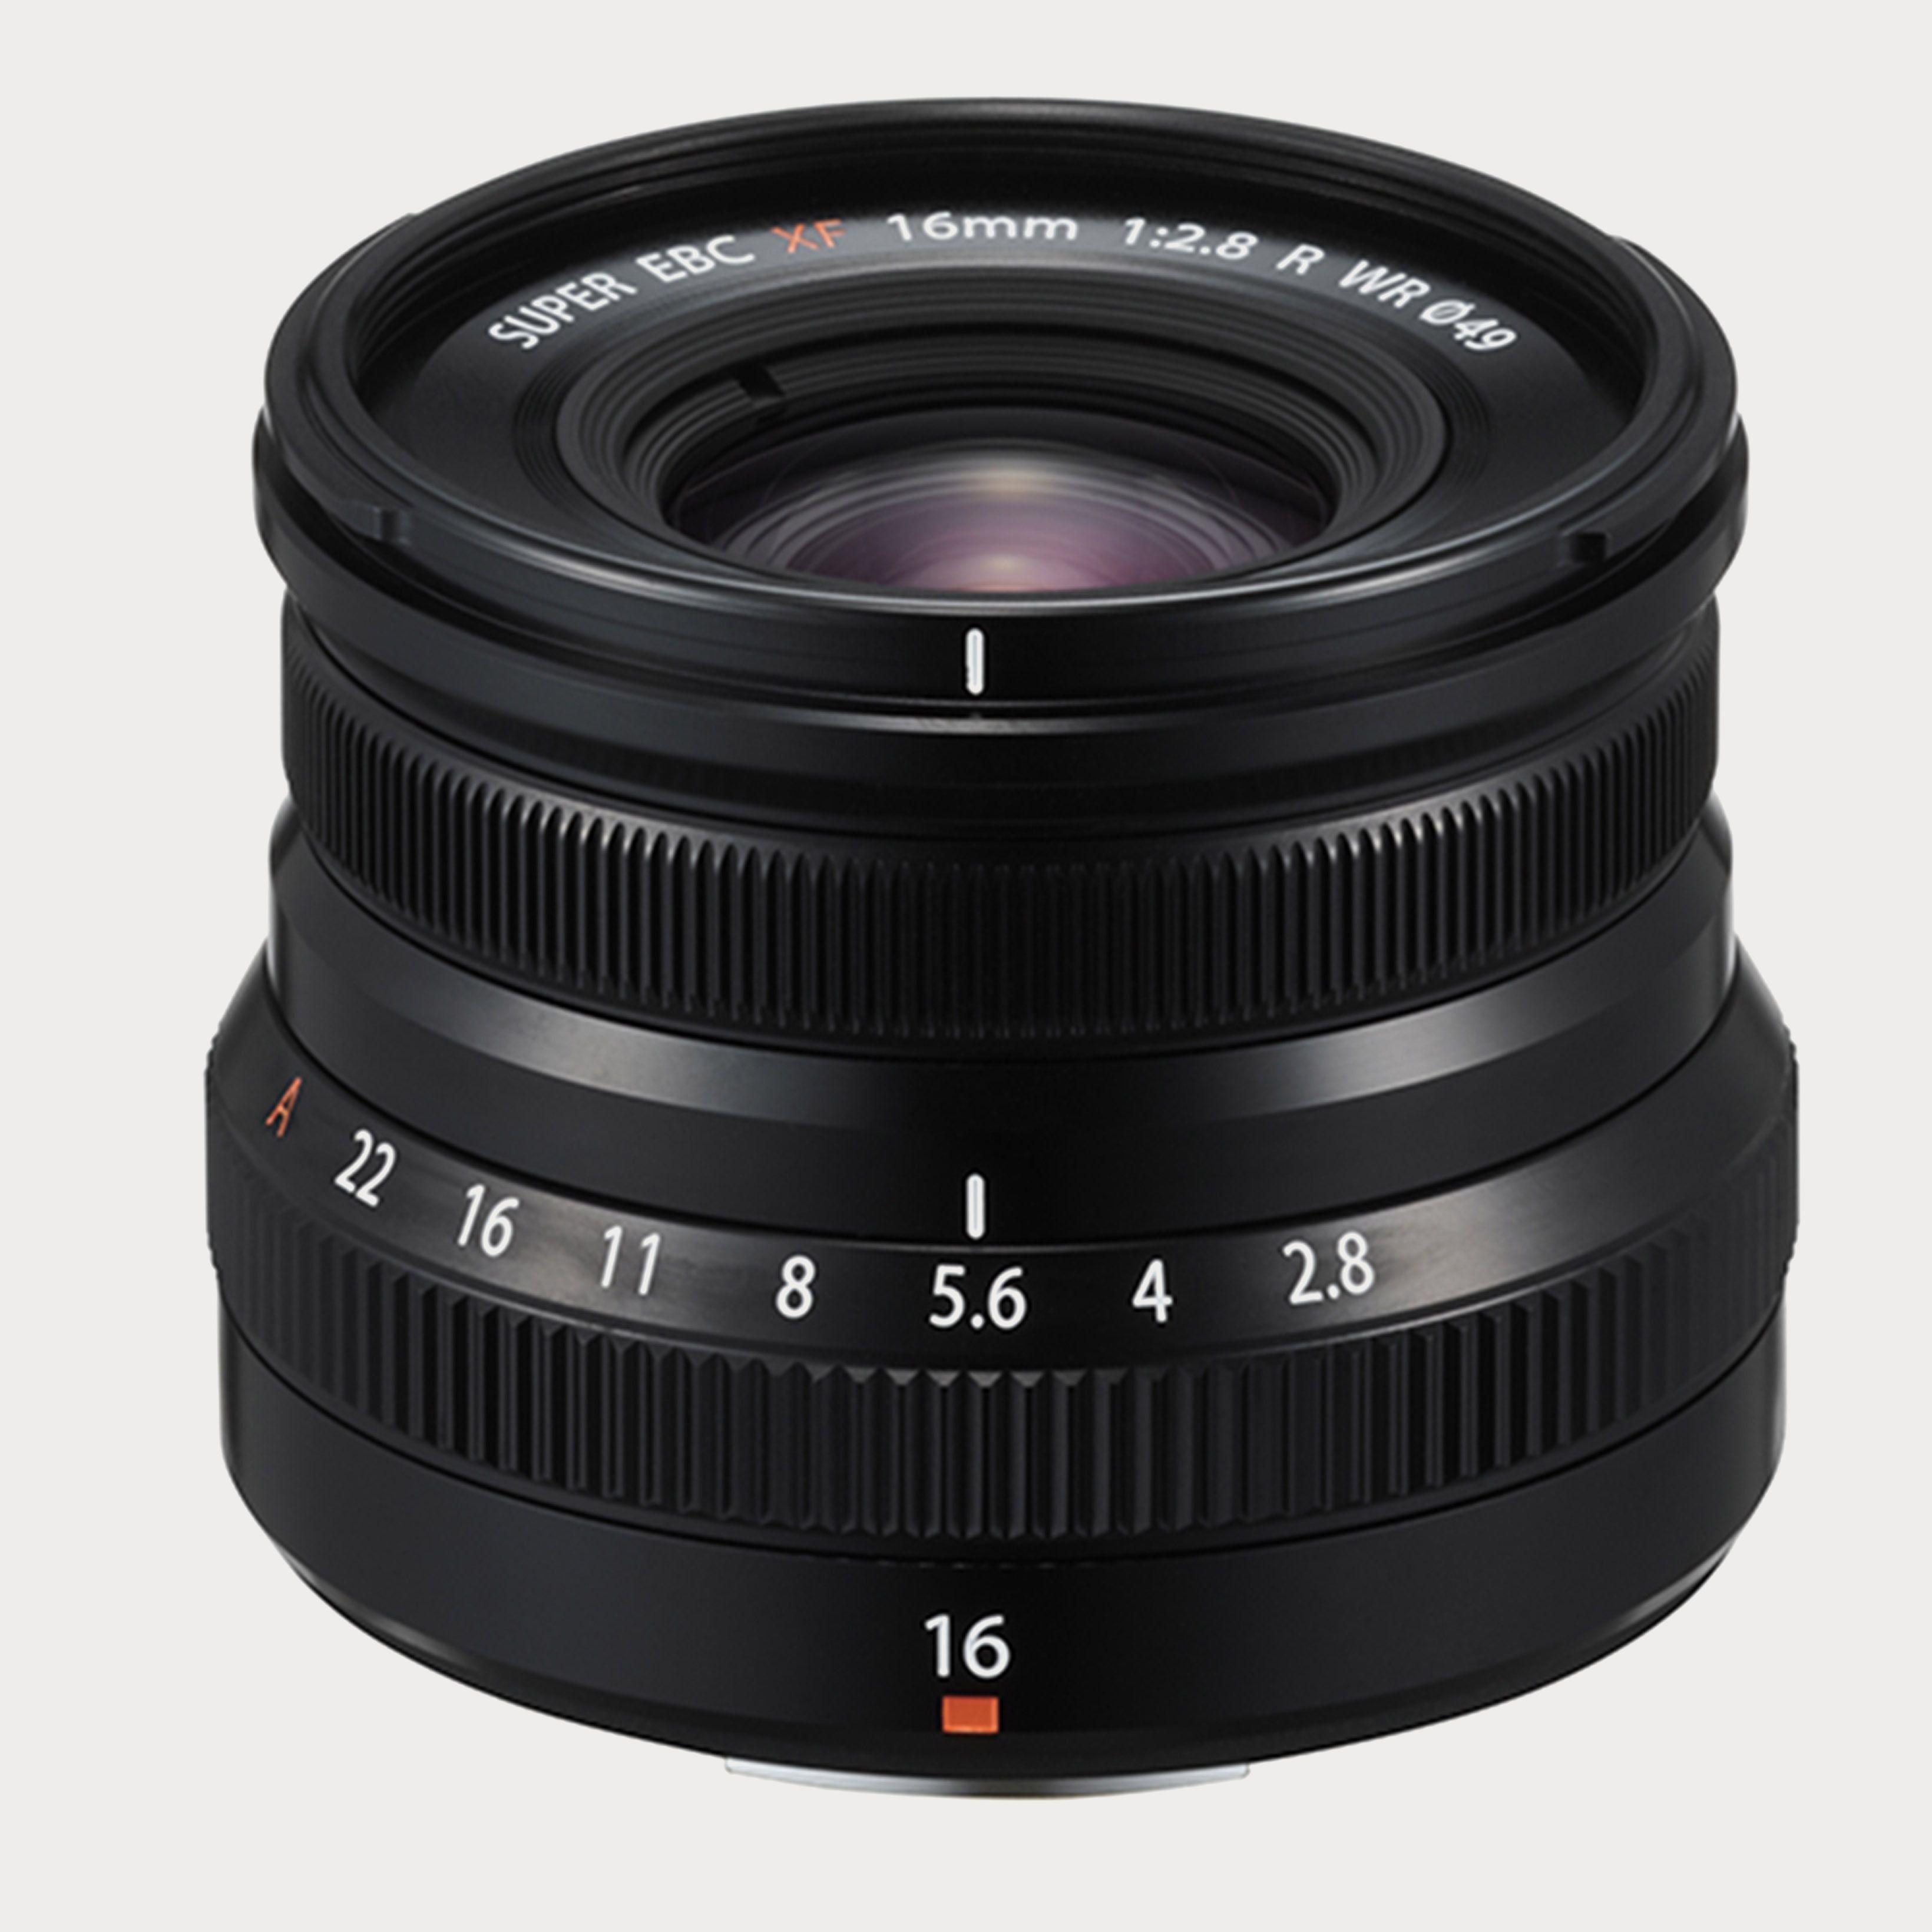 XF 10-24mm F4 R OIS WR Lens | Moment